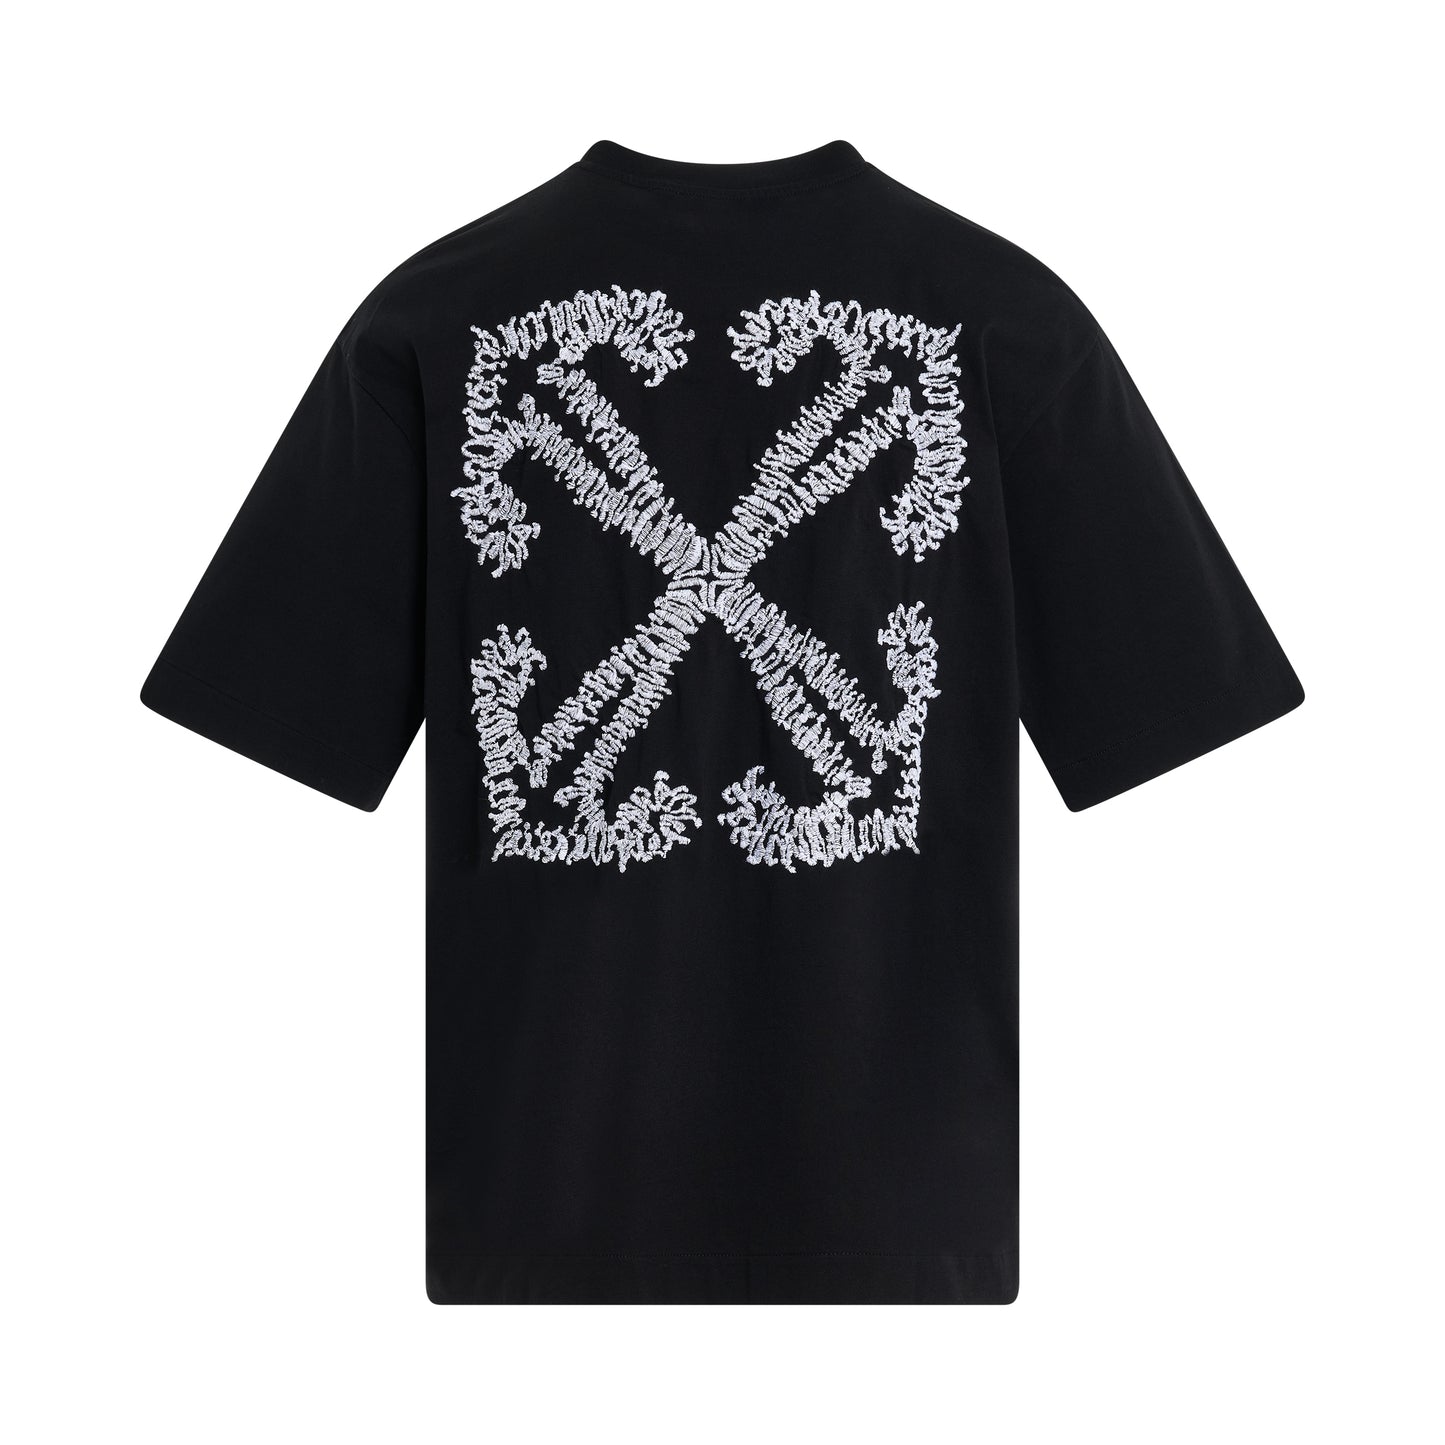 Tattoo Arrow Skate T-Shirt in Black/White